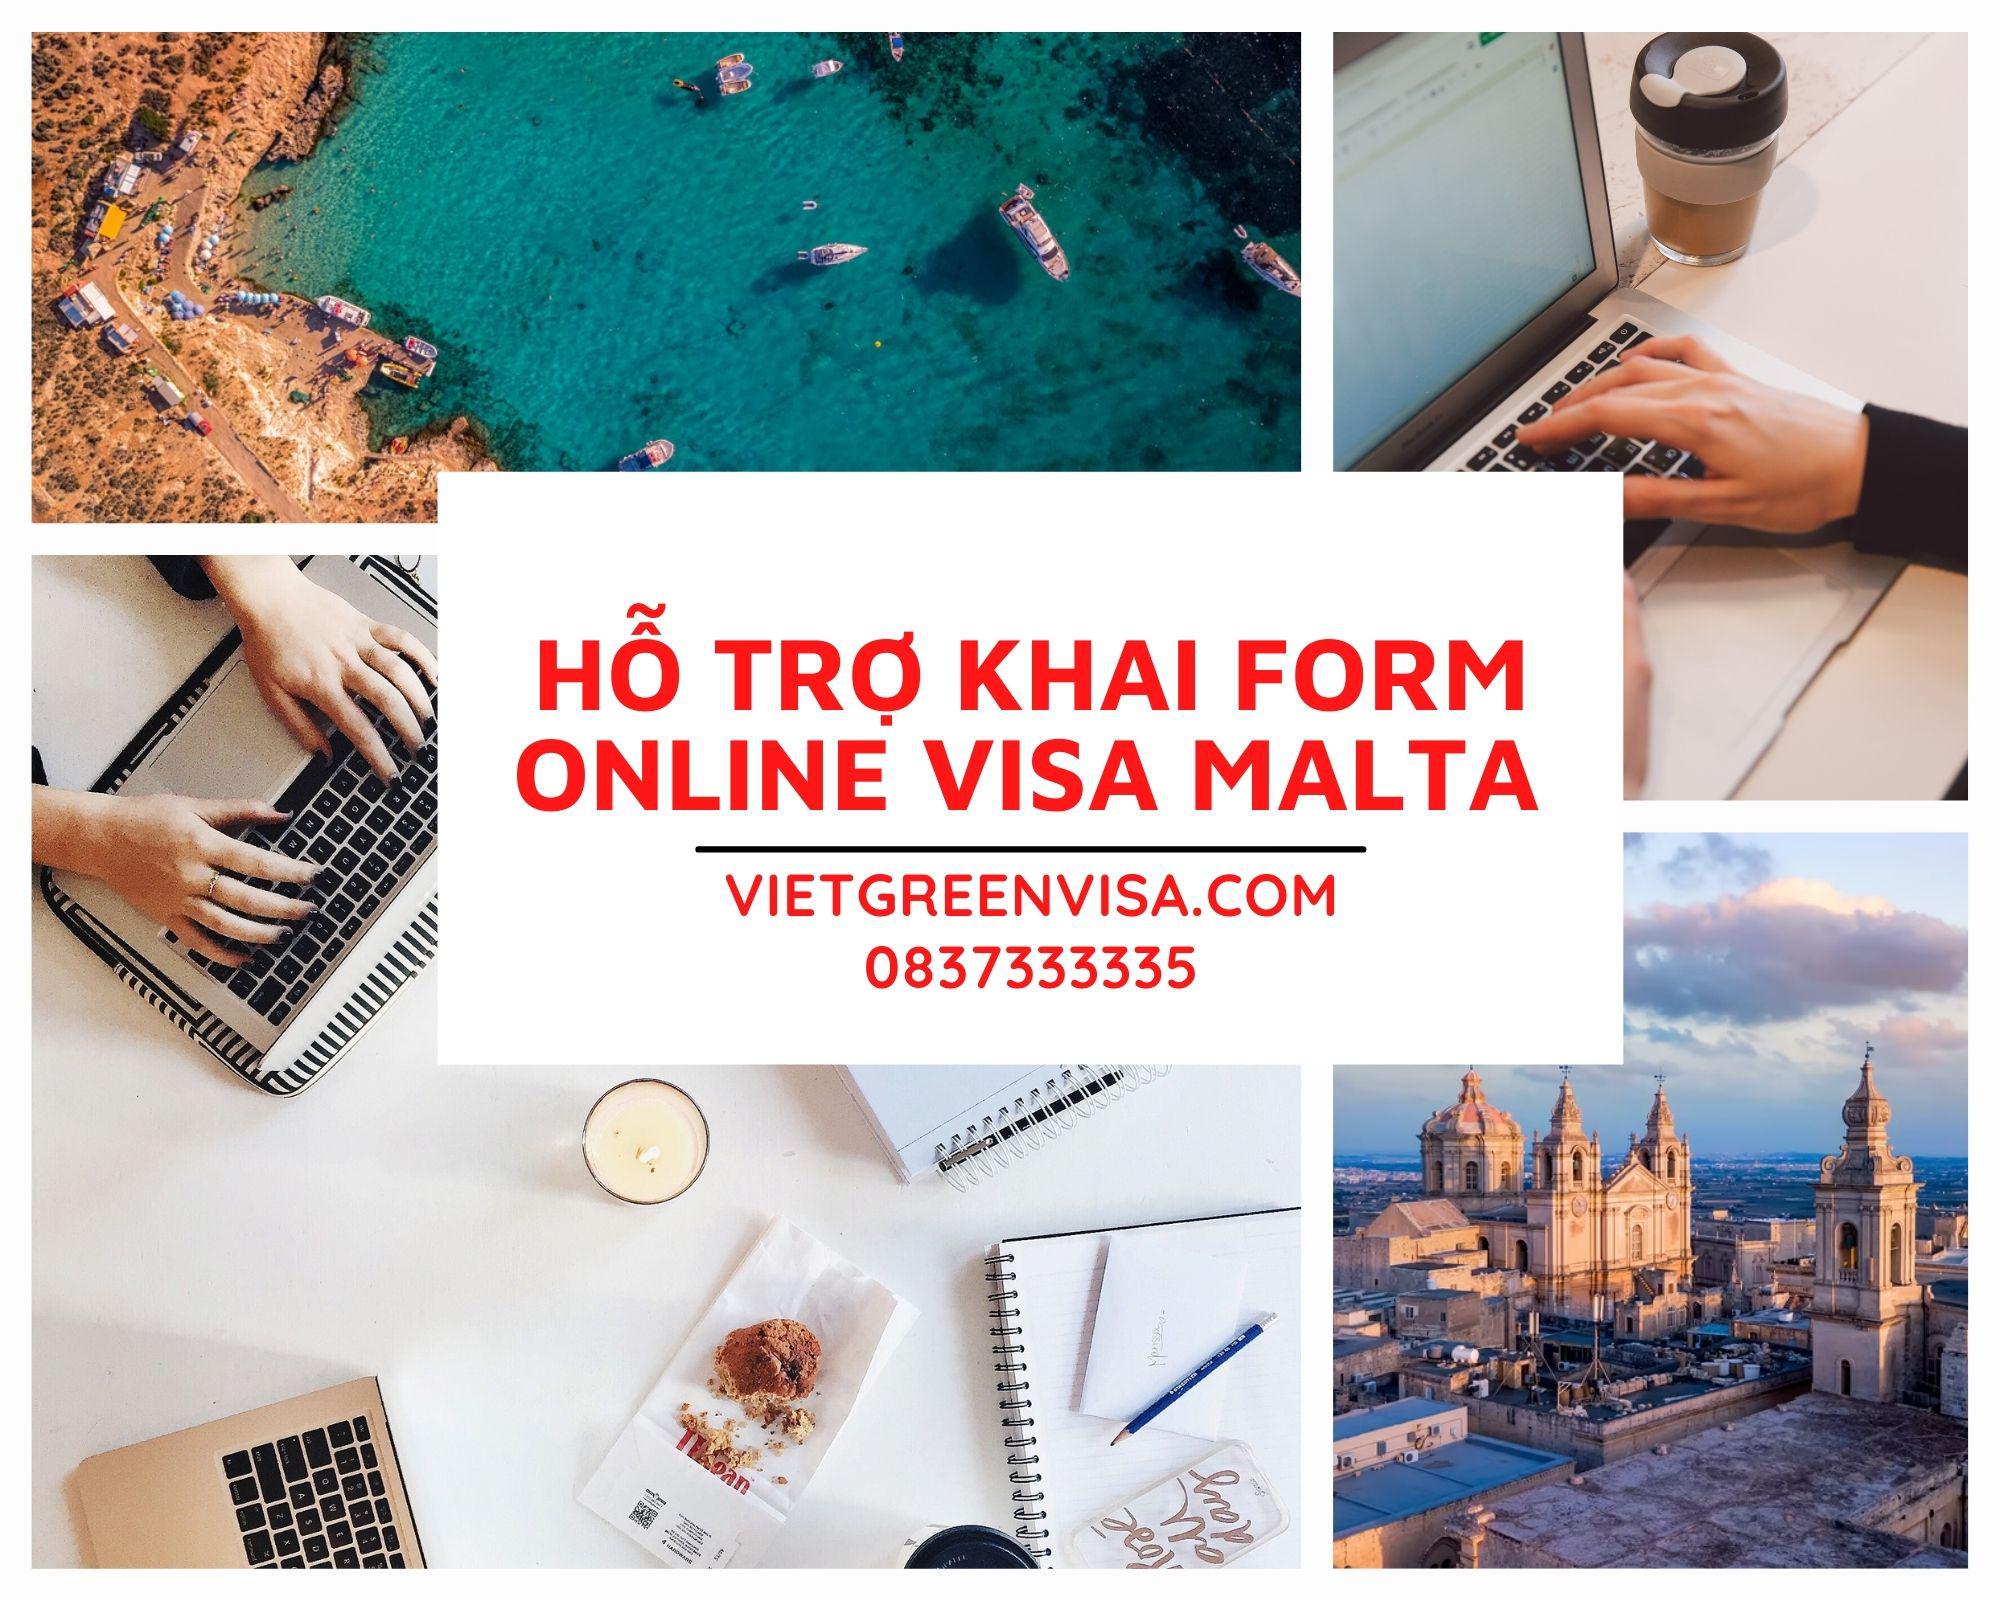 Hỗ trợ khai form online visa đi Malta